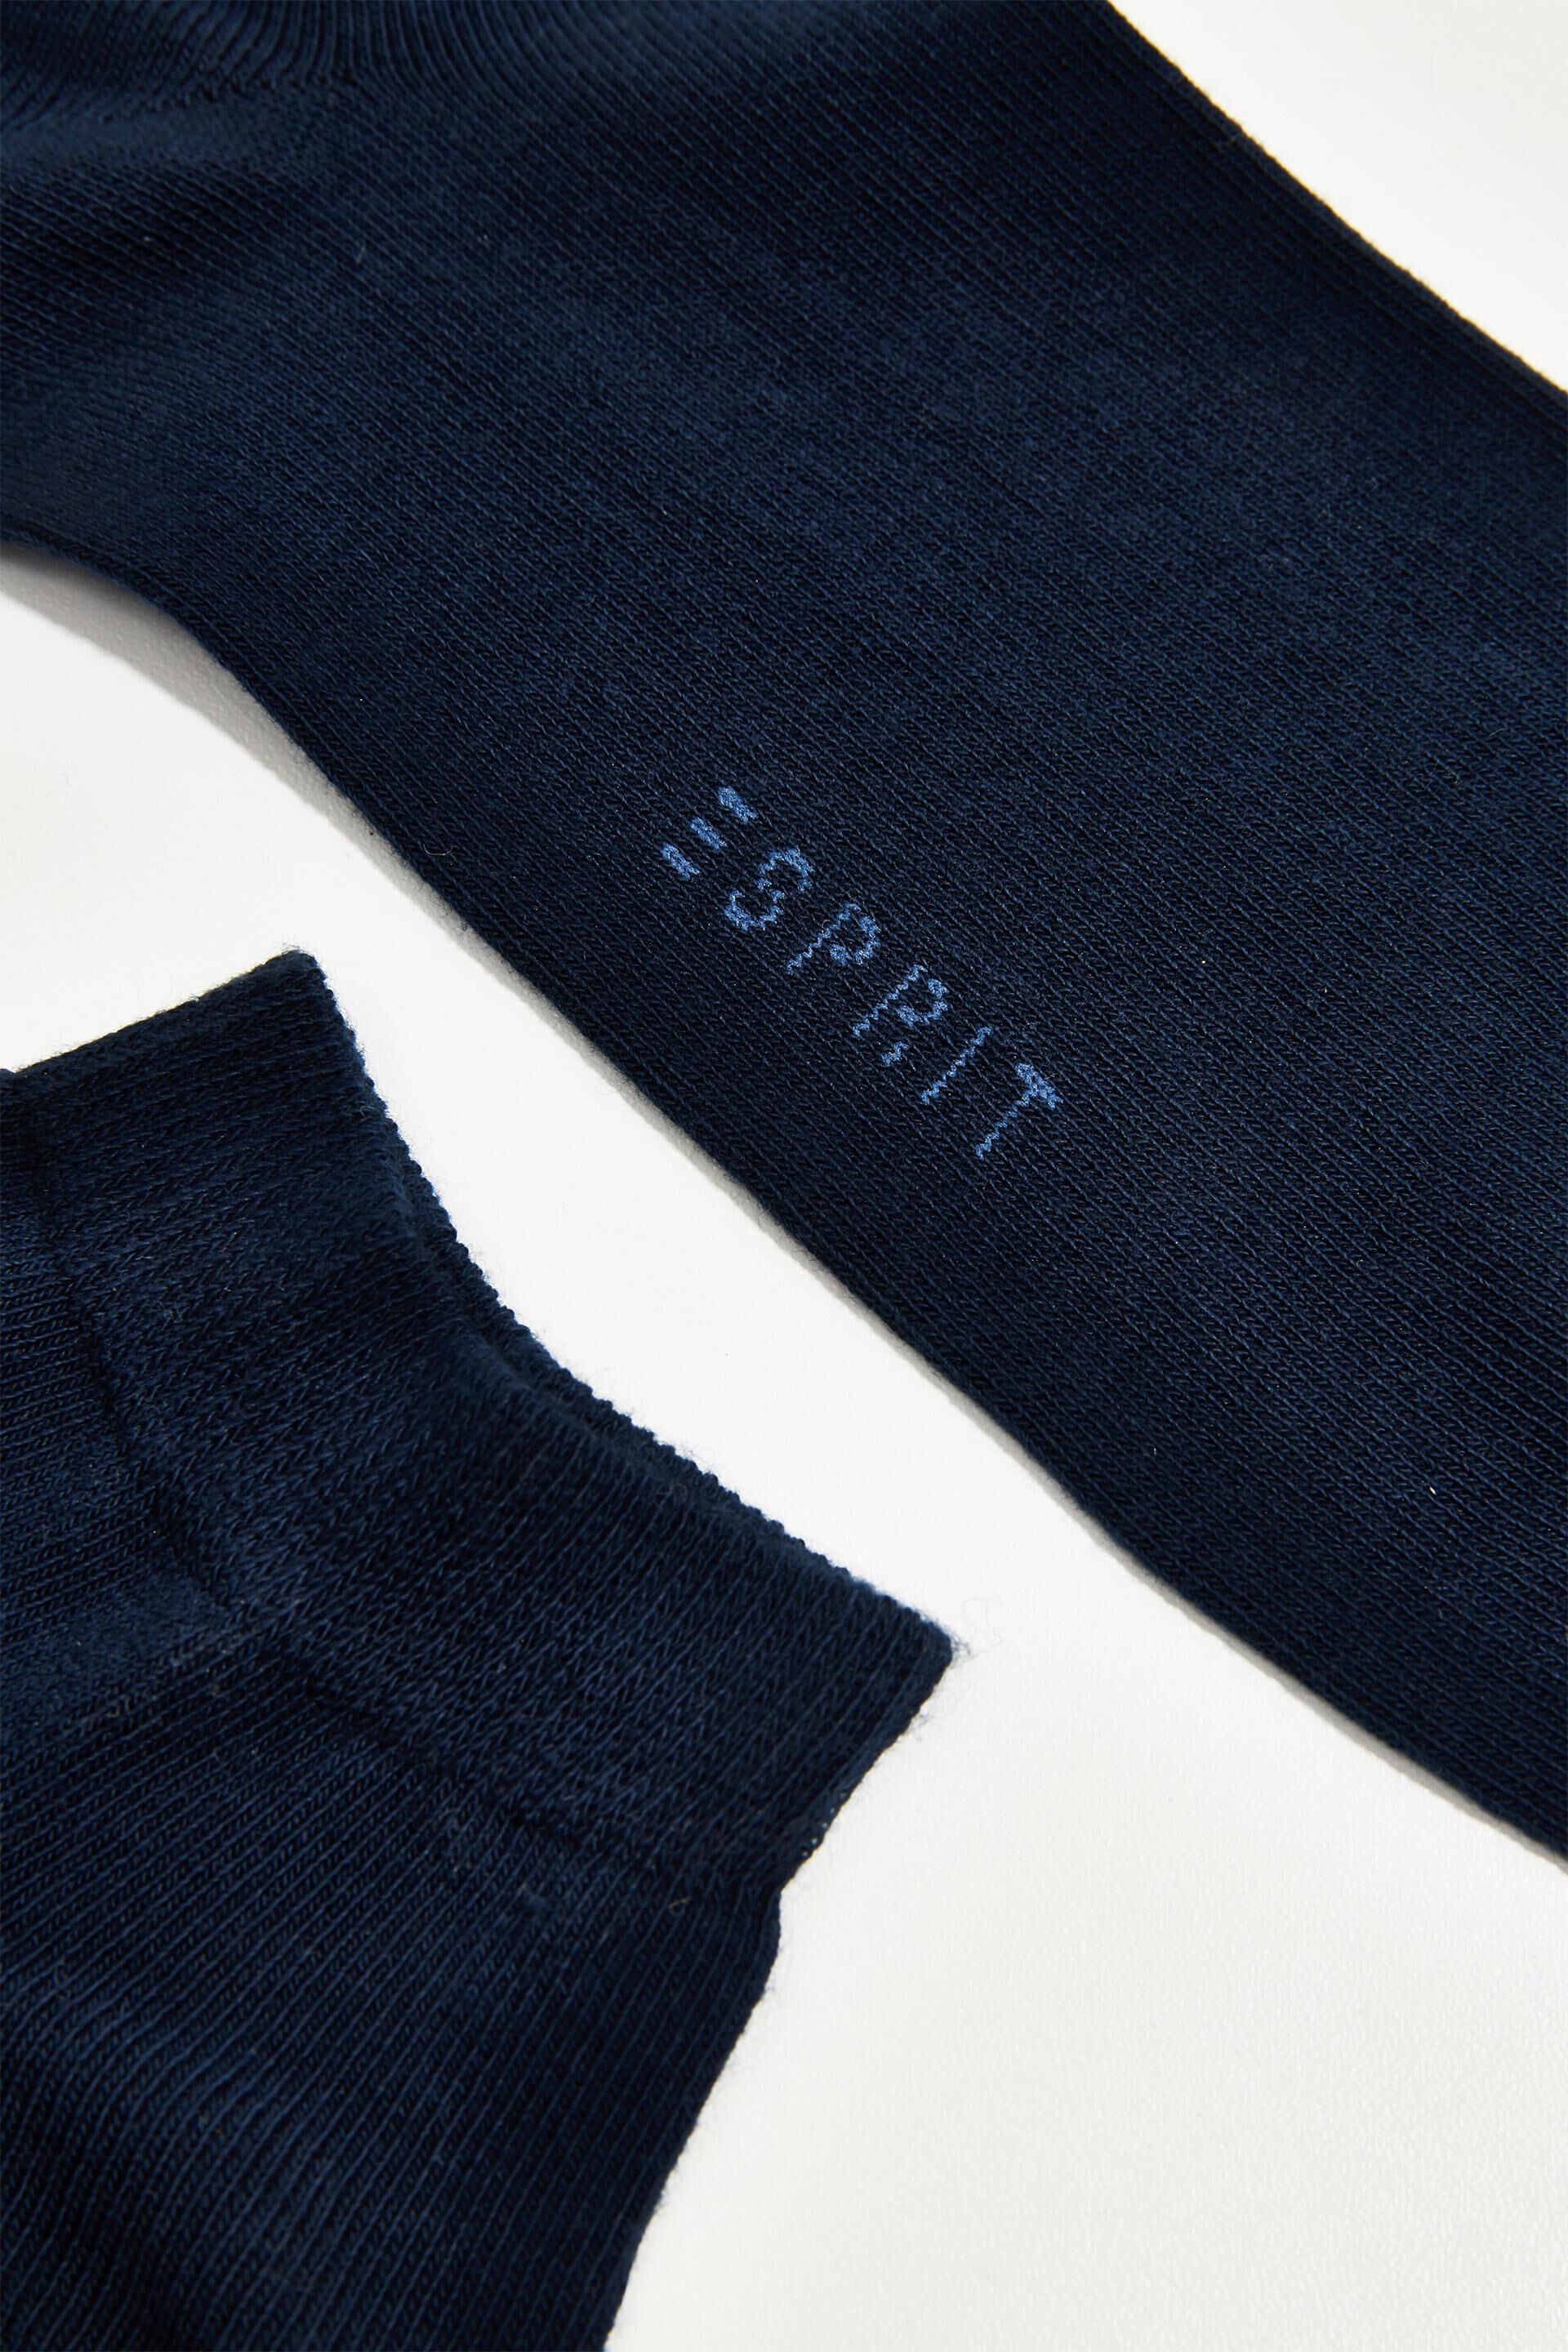 Esprit Baumwollmischung 5er-Pack aus Sneakersocken